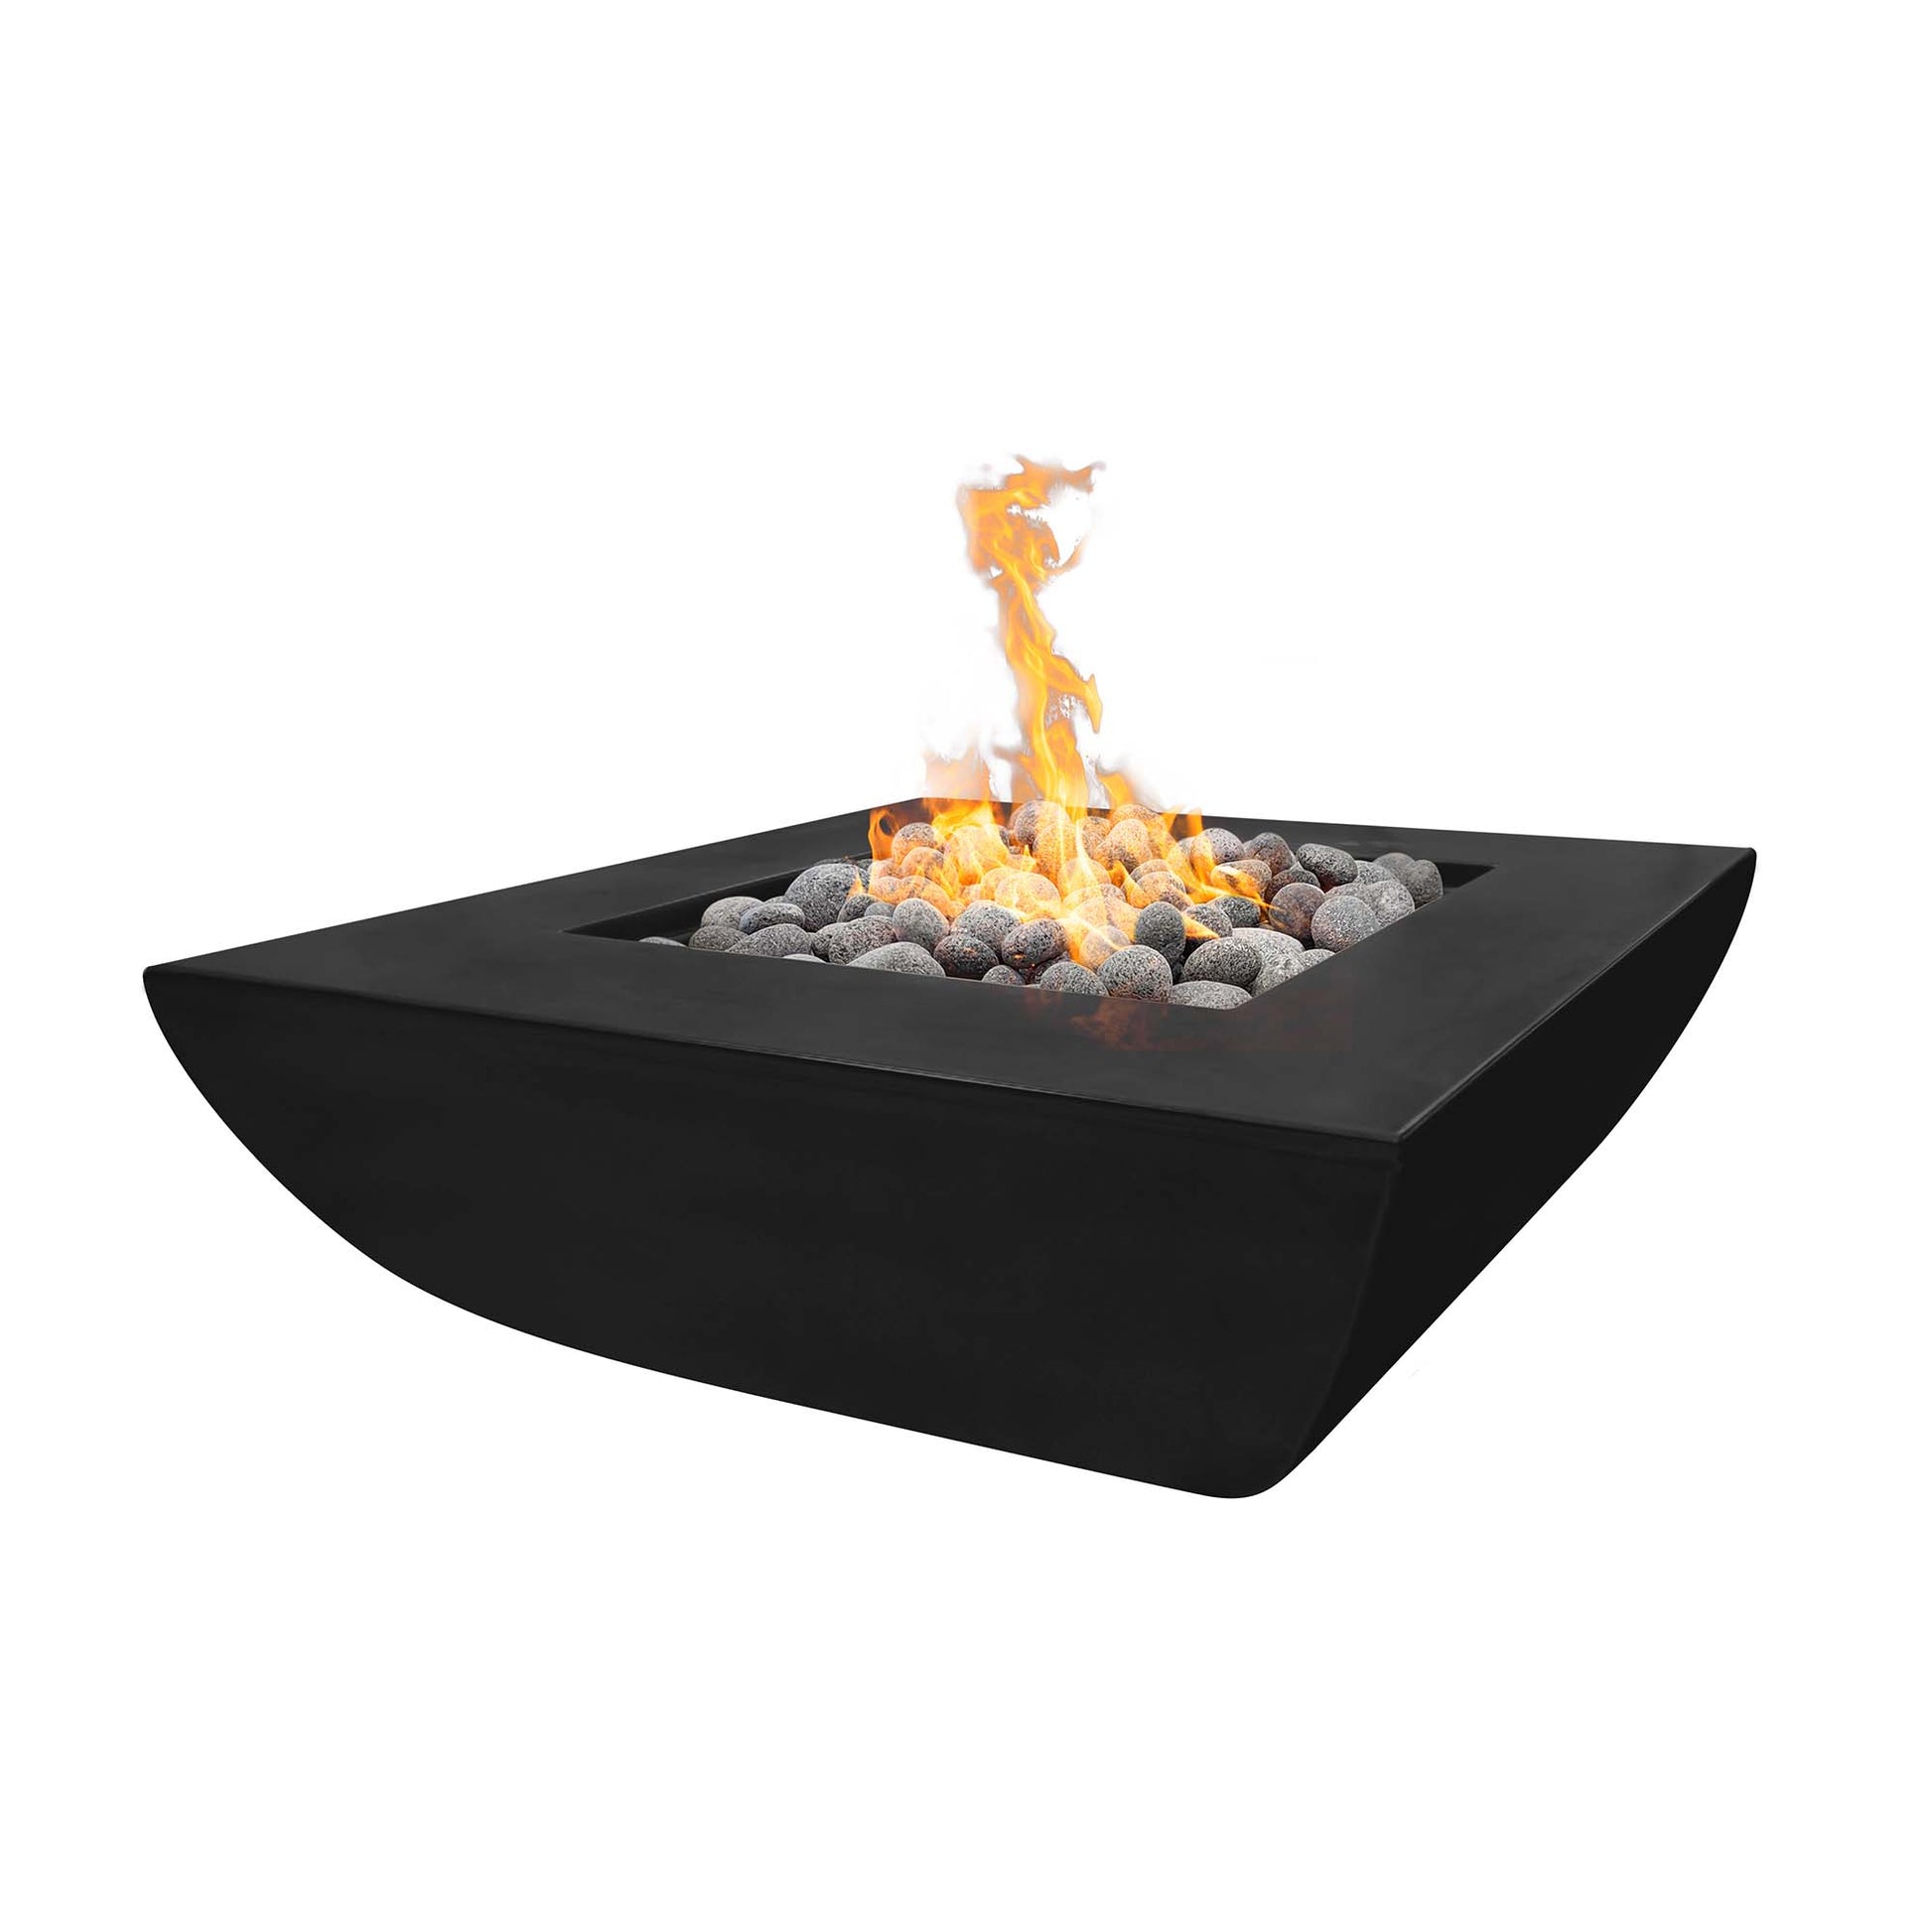 The Outdoor Plus Square Avalon 42" Black GFRC Concrete Liquid Propane Fire Pit with Match Lit Ignition